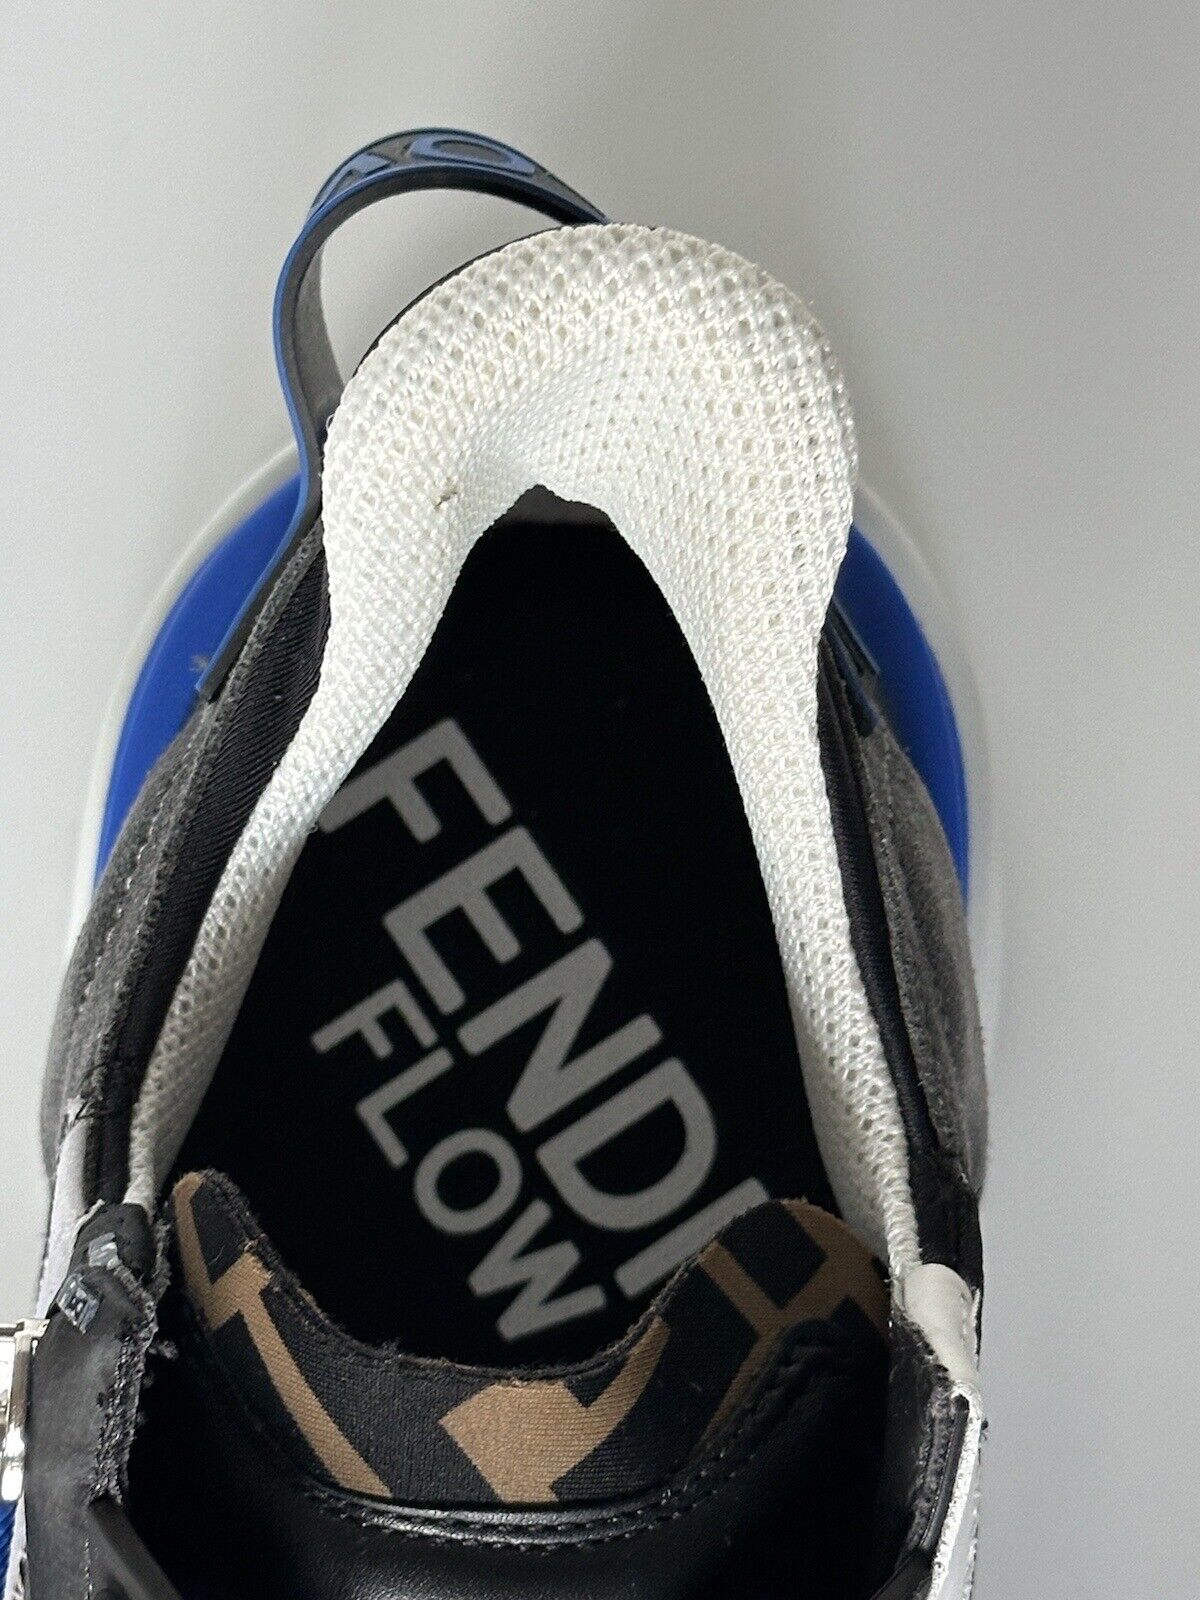 NIB Мужские кроссовки Fendi Flow из кожи/ткани, 870 долларов США, синие 13 США (46 евро) 7E1392 IT